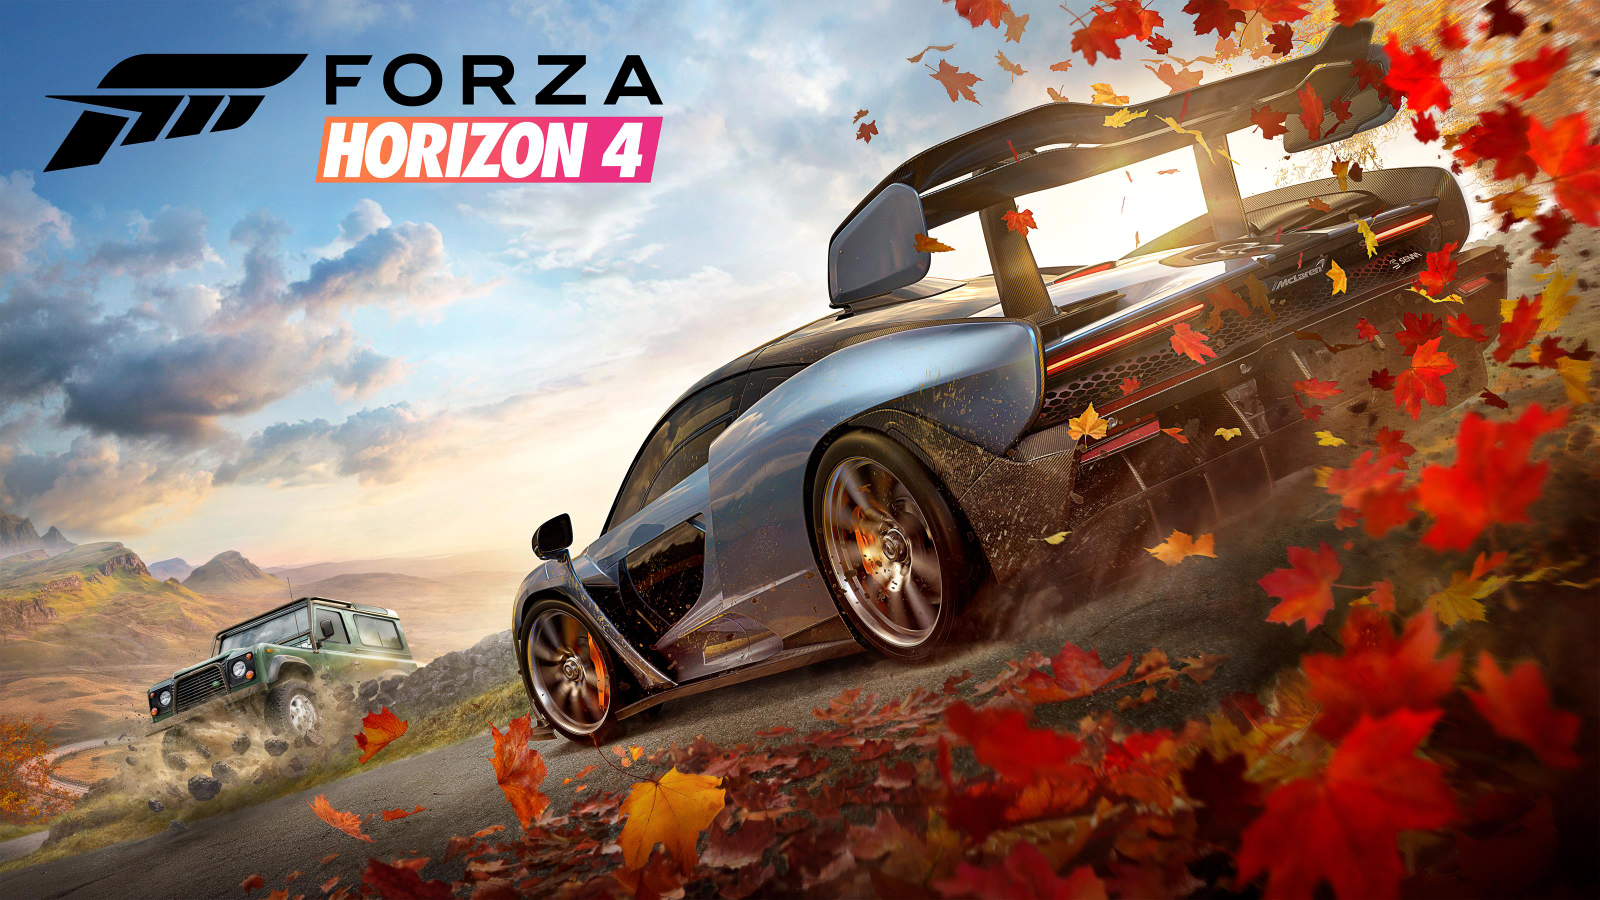 Job Listing Seemingly Confirms Forza Horizon 6 Development